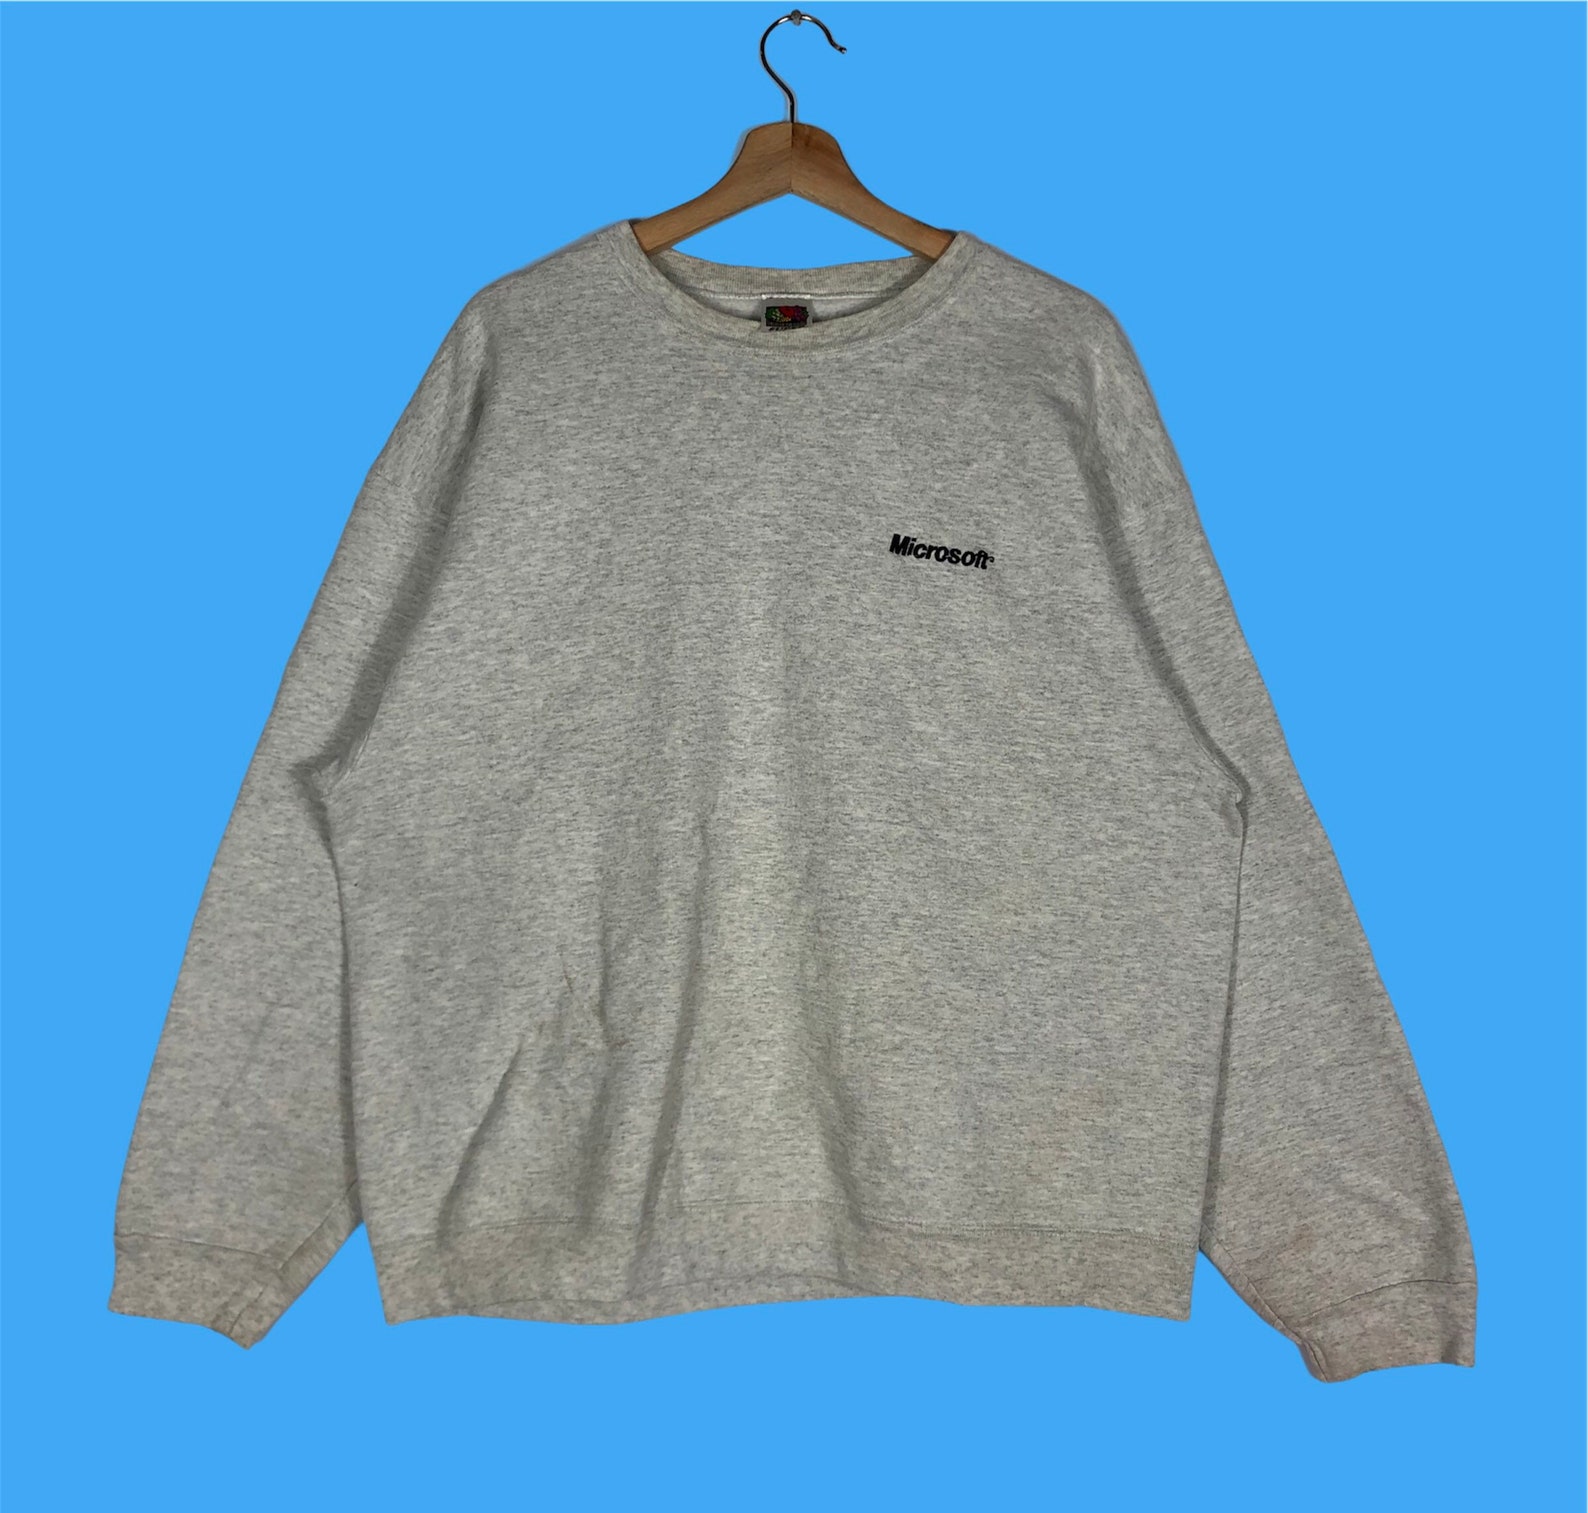 Vintage Microsoft Sweatshirt crewneck pullover XL size | Etsy